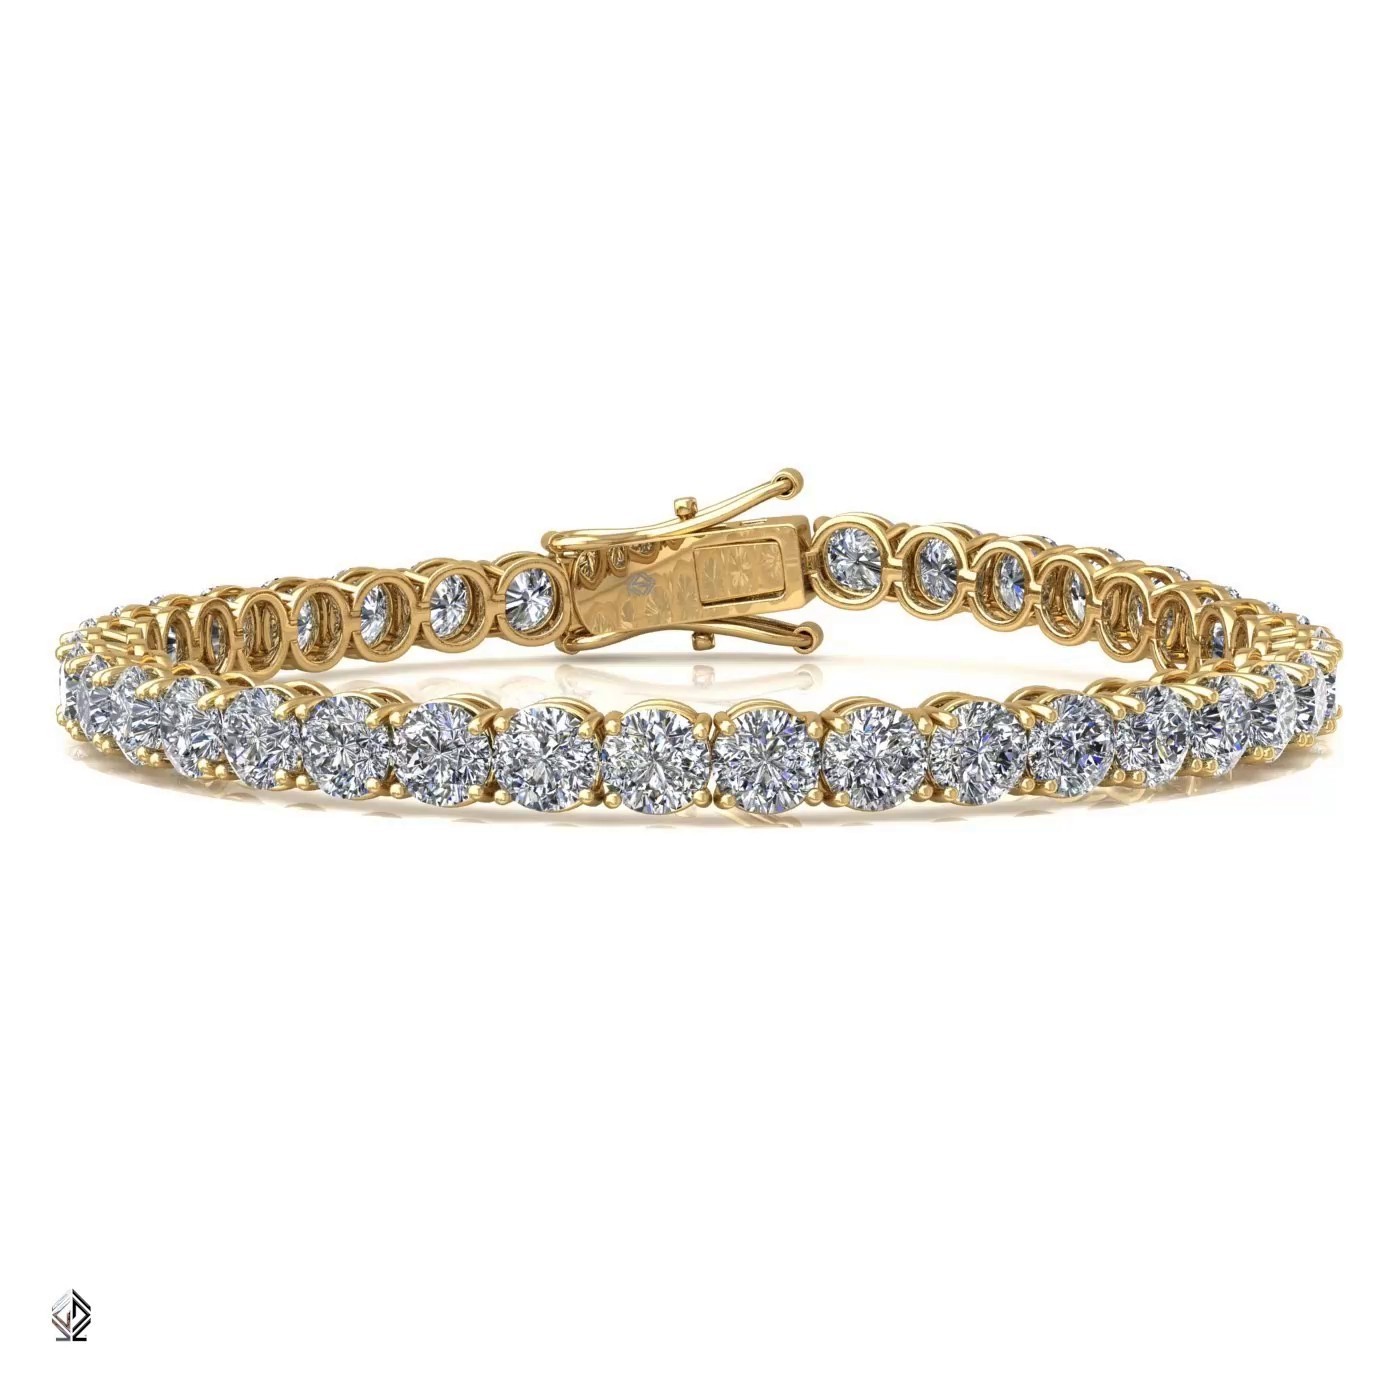 18k white gold 3.8mm 4 prong round shape diamond tennis bracelet in round setting Photos & images